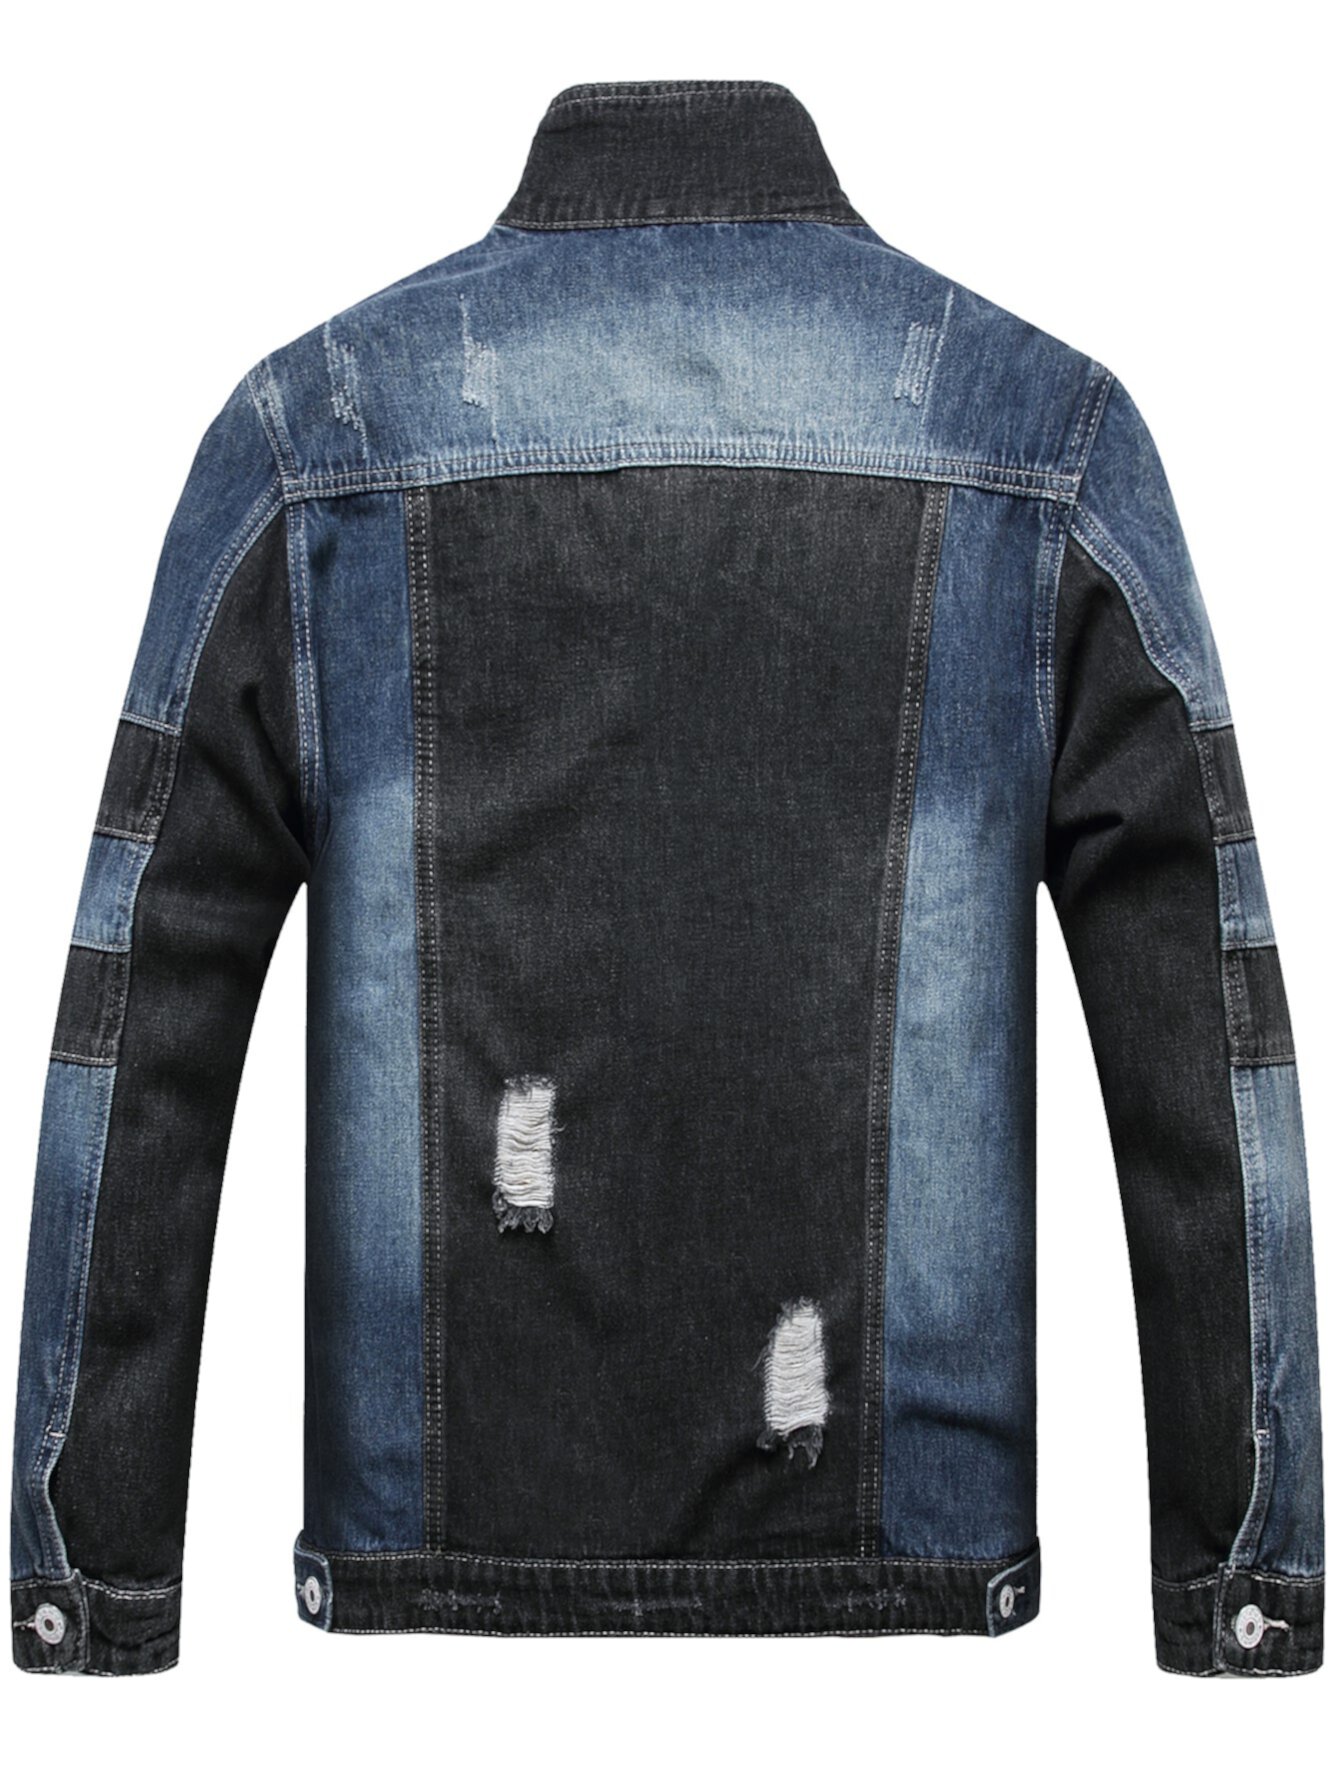 Двухцветная рваная джинсовая куртка для мужчины SHEIN